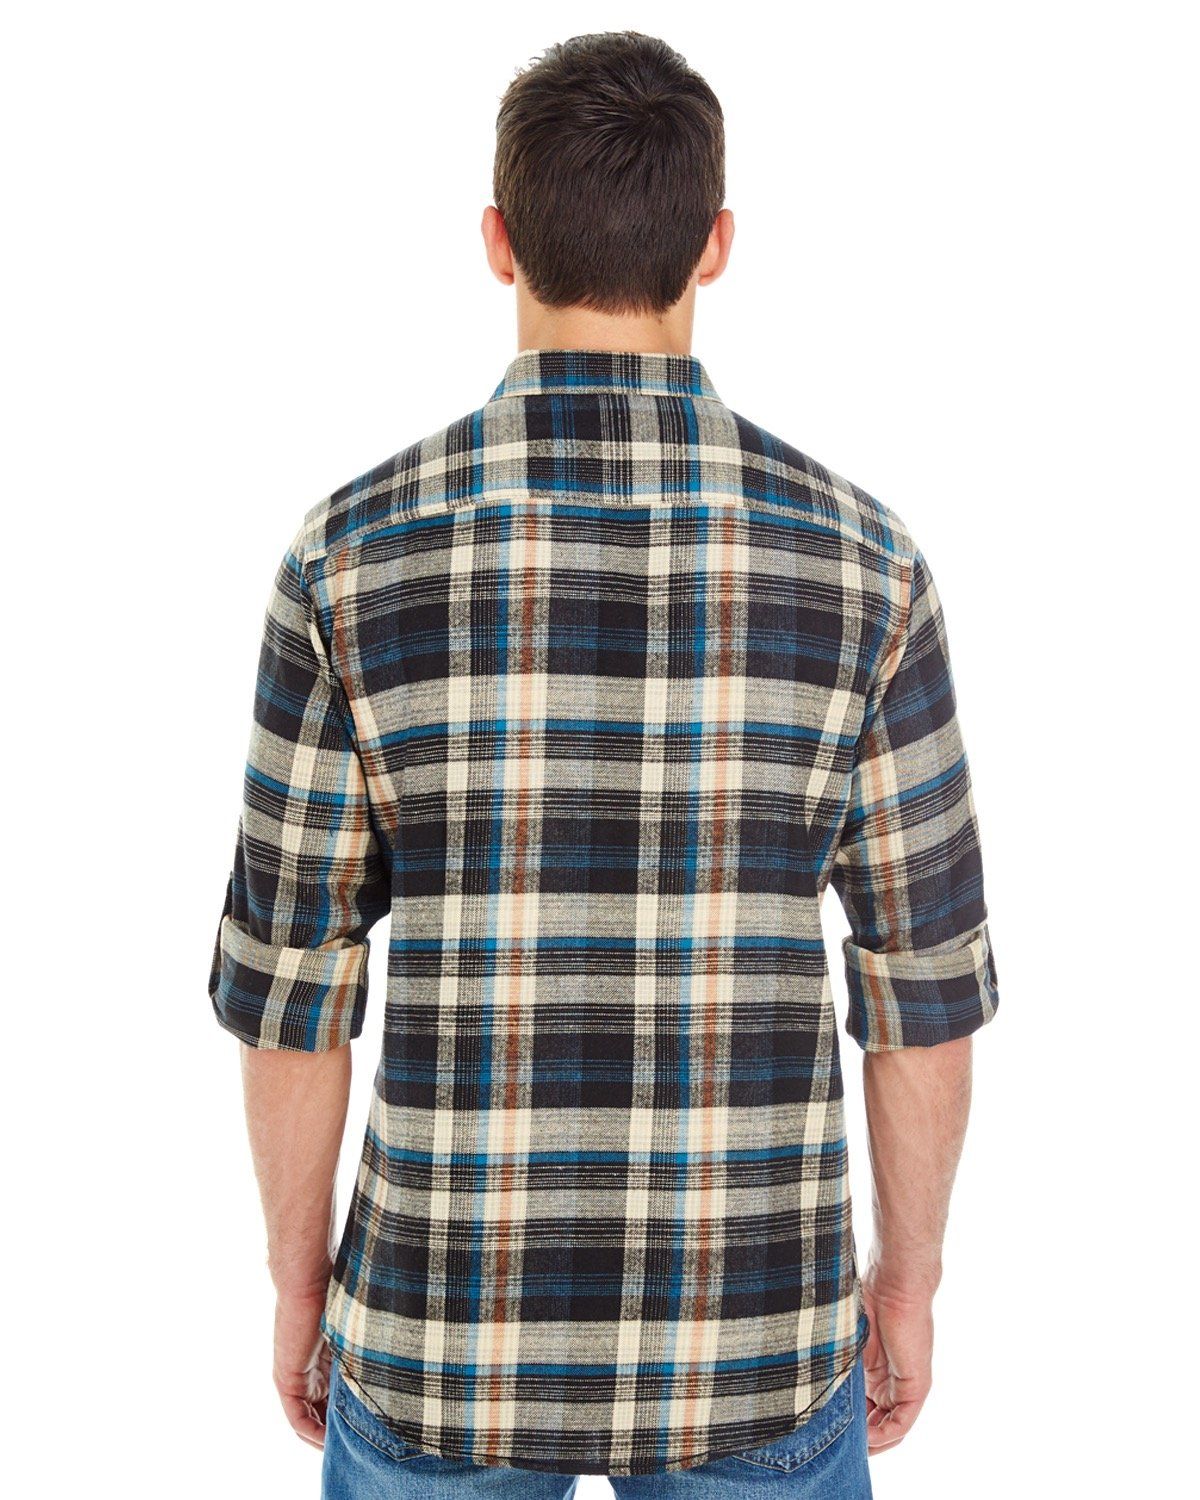 'Burnside B8210 Men's Plaid Flannel Shirt'